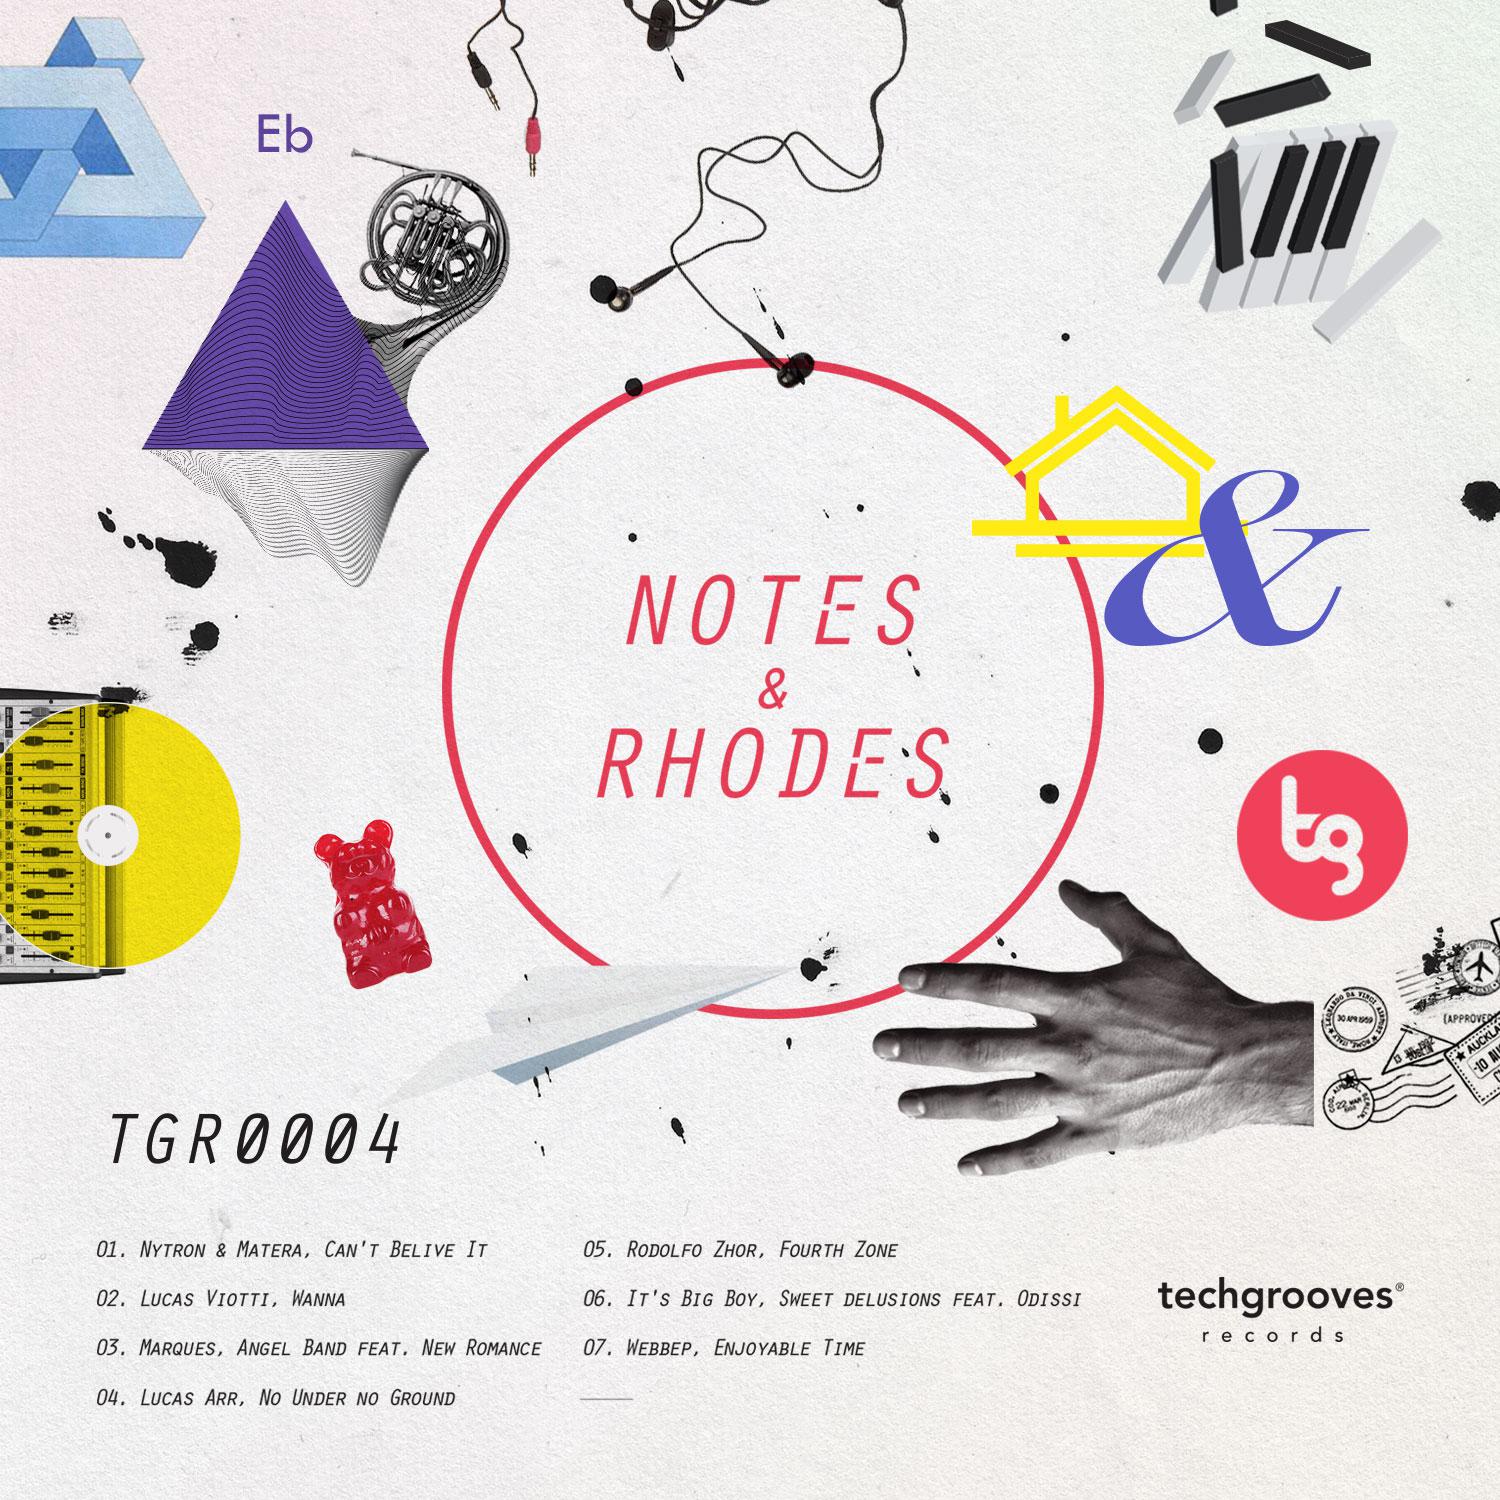 Notes & Rhodes